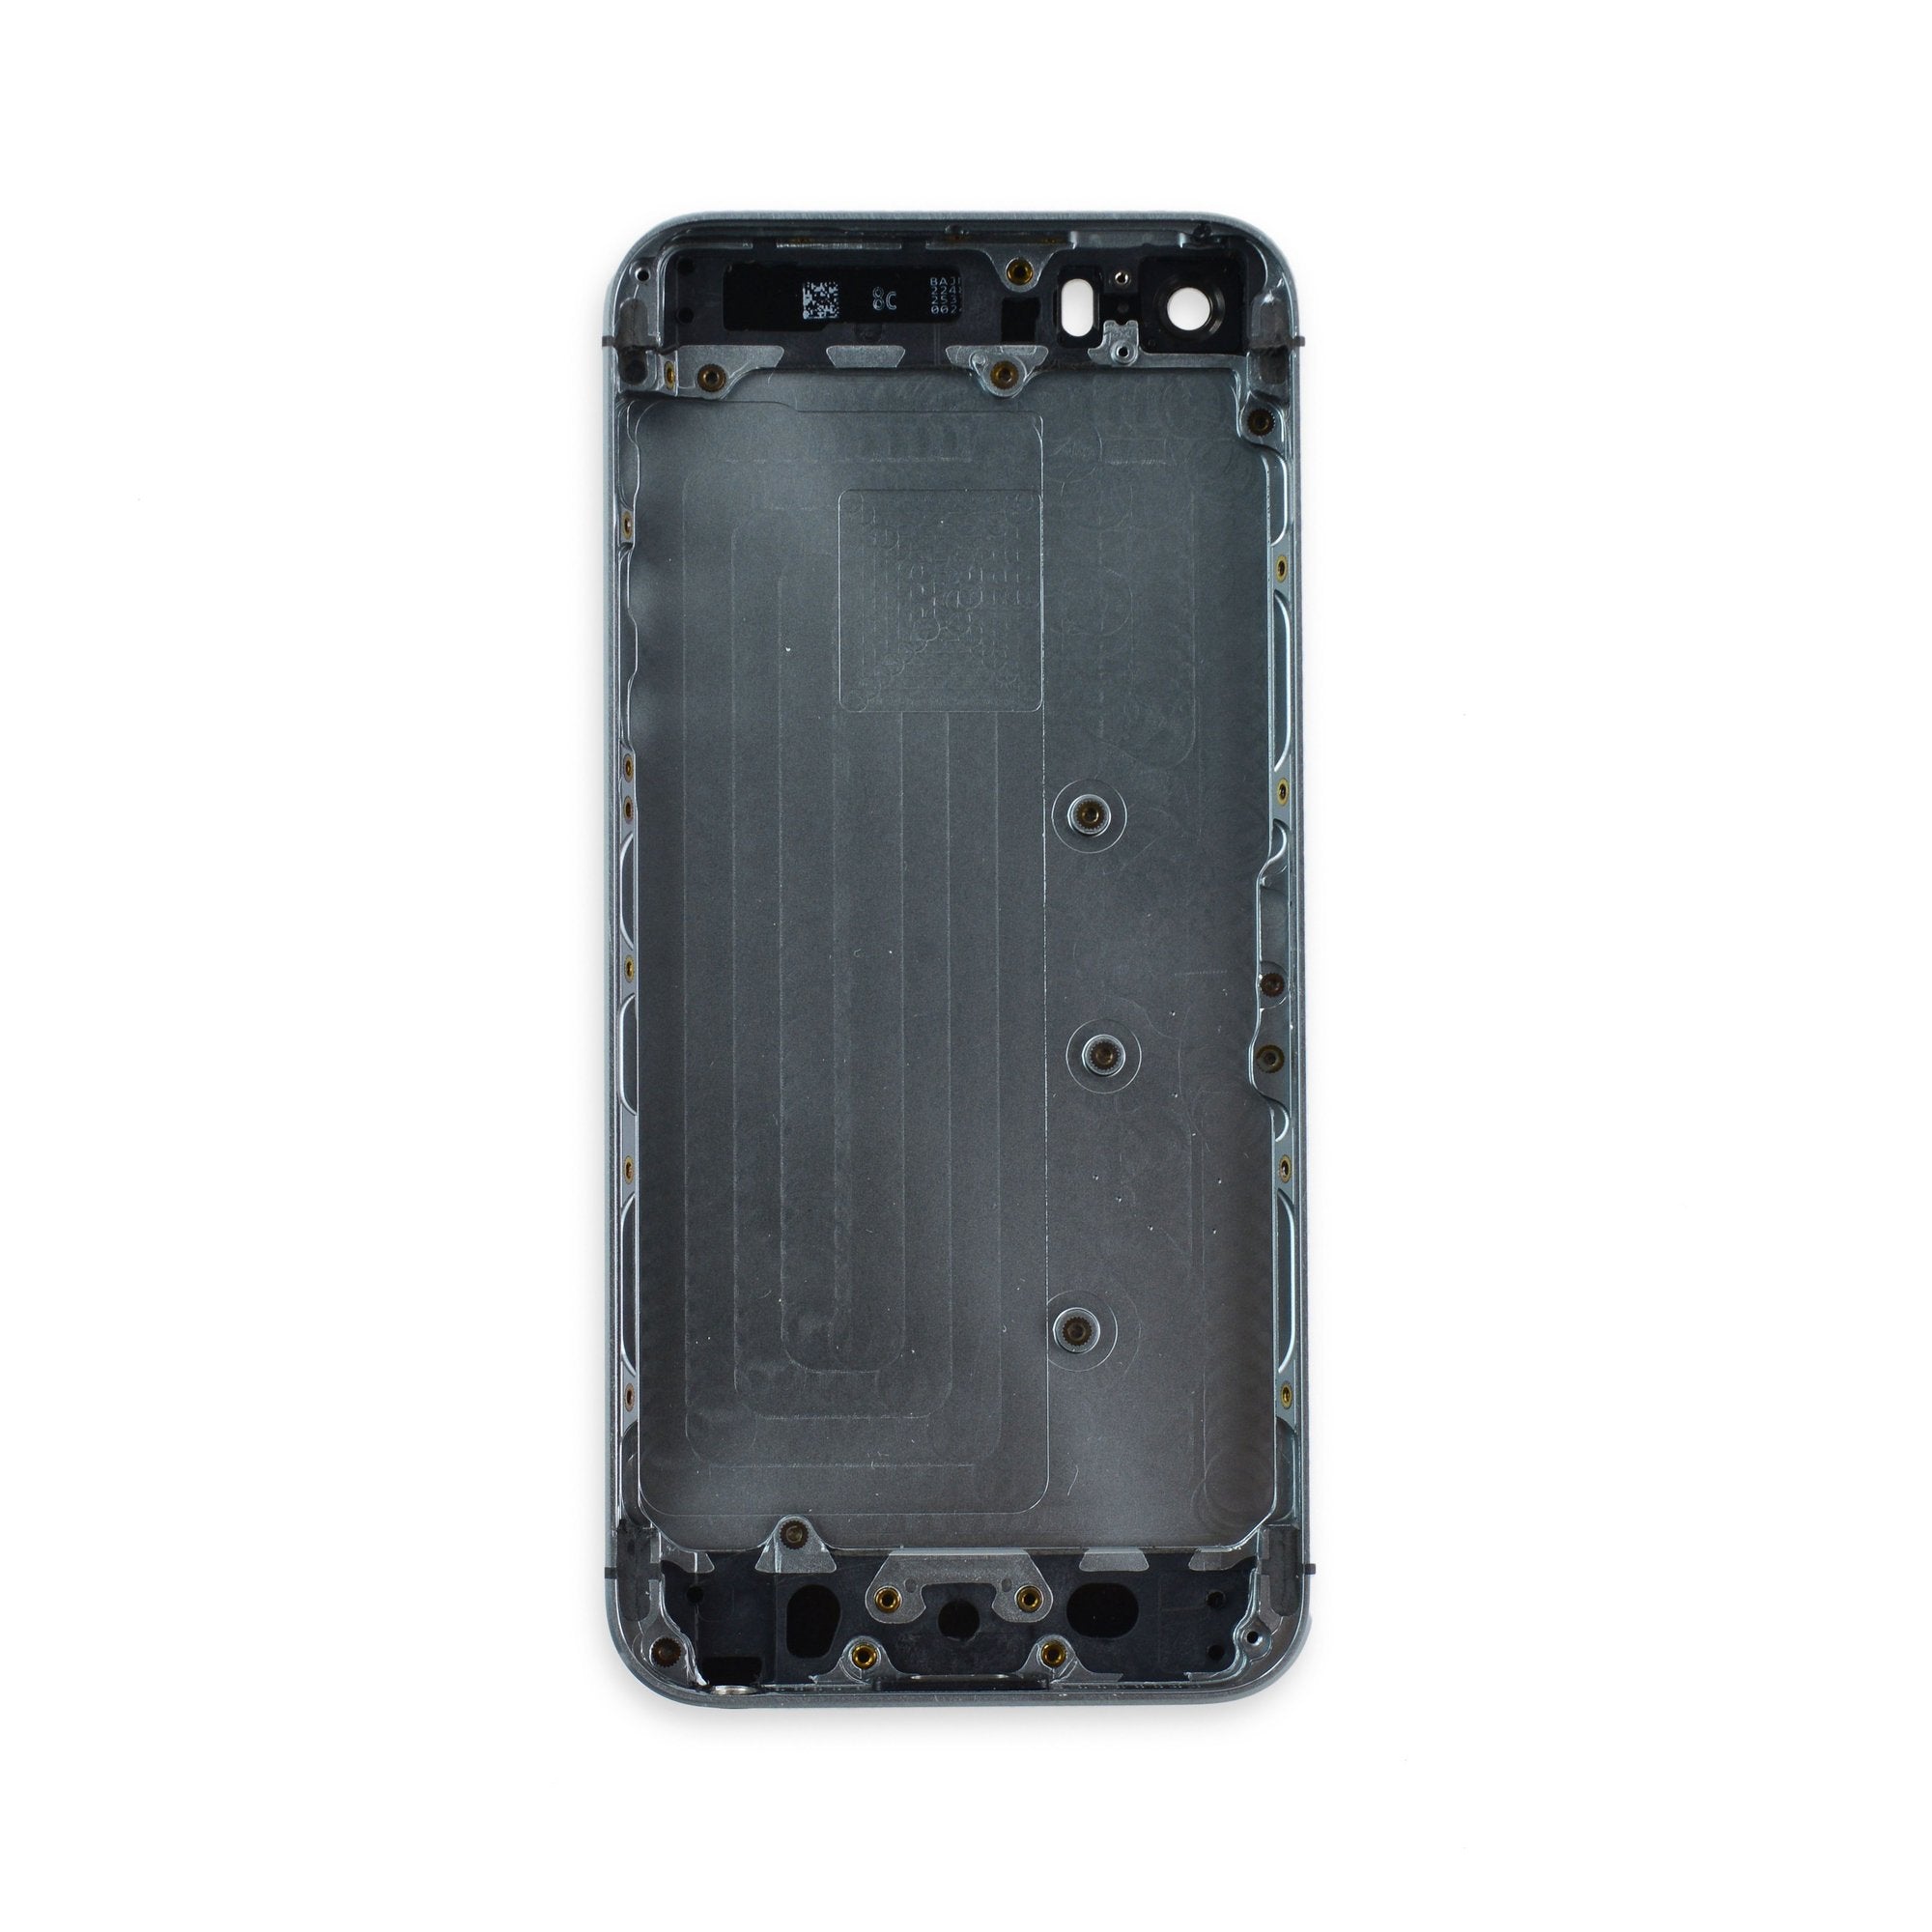 iPhone 5s Blank Rear Case Black New